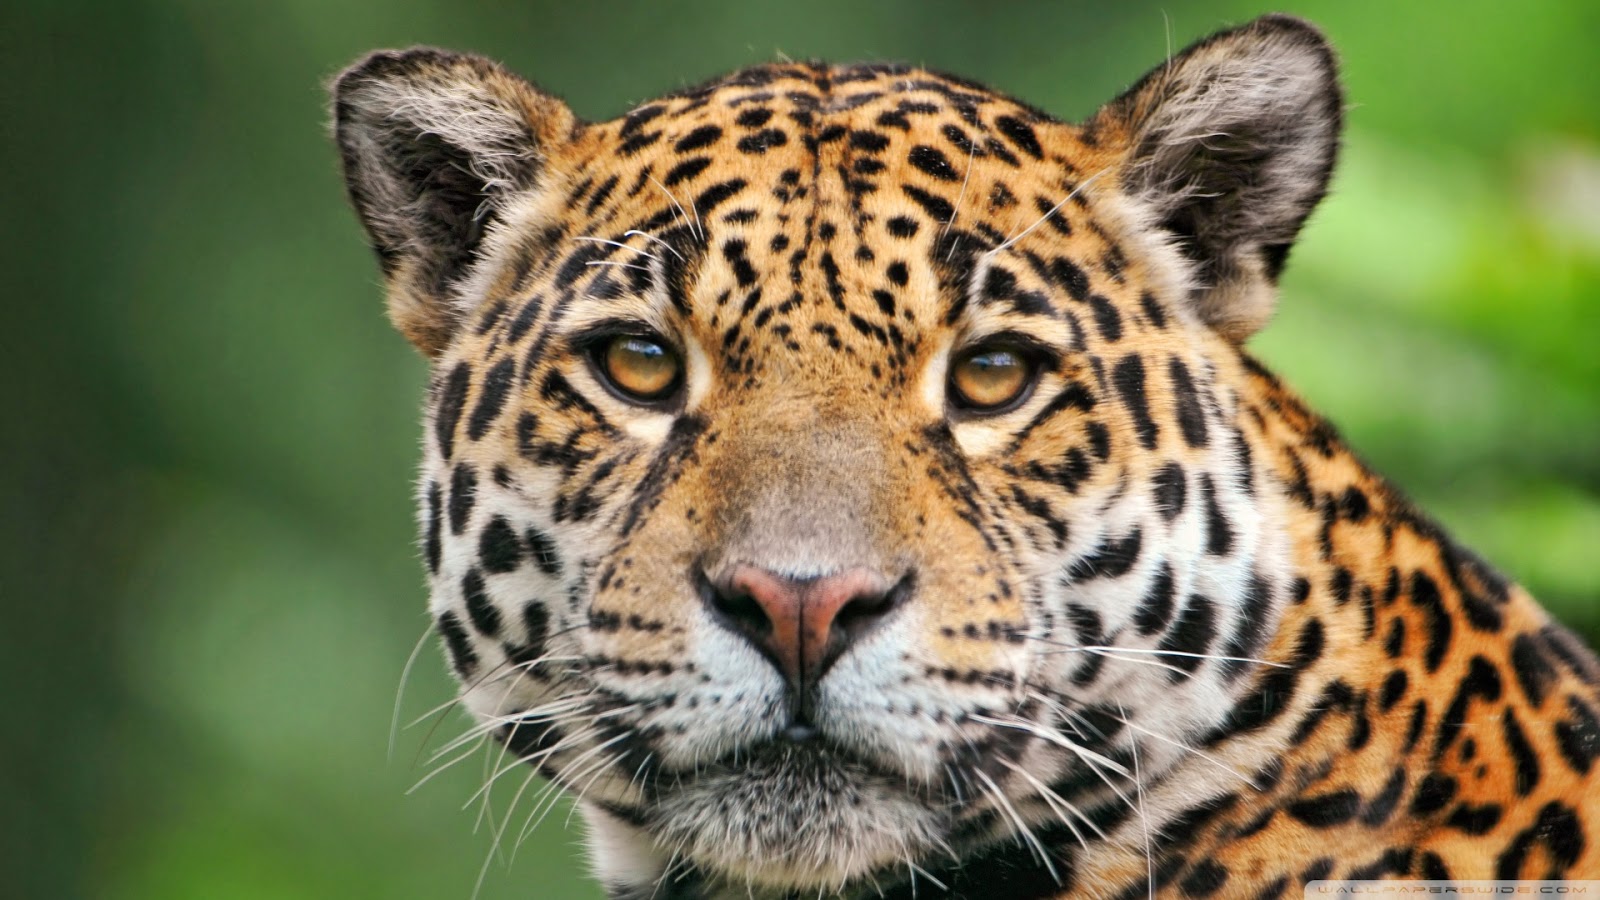 beste tiertapete,landtier,tierwelt,jaguar,leopard,schnurrhaare